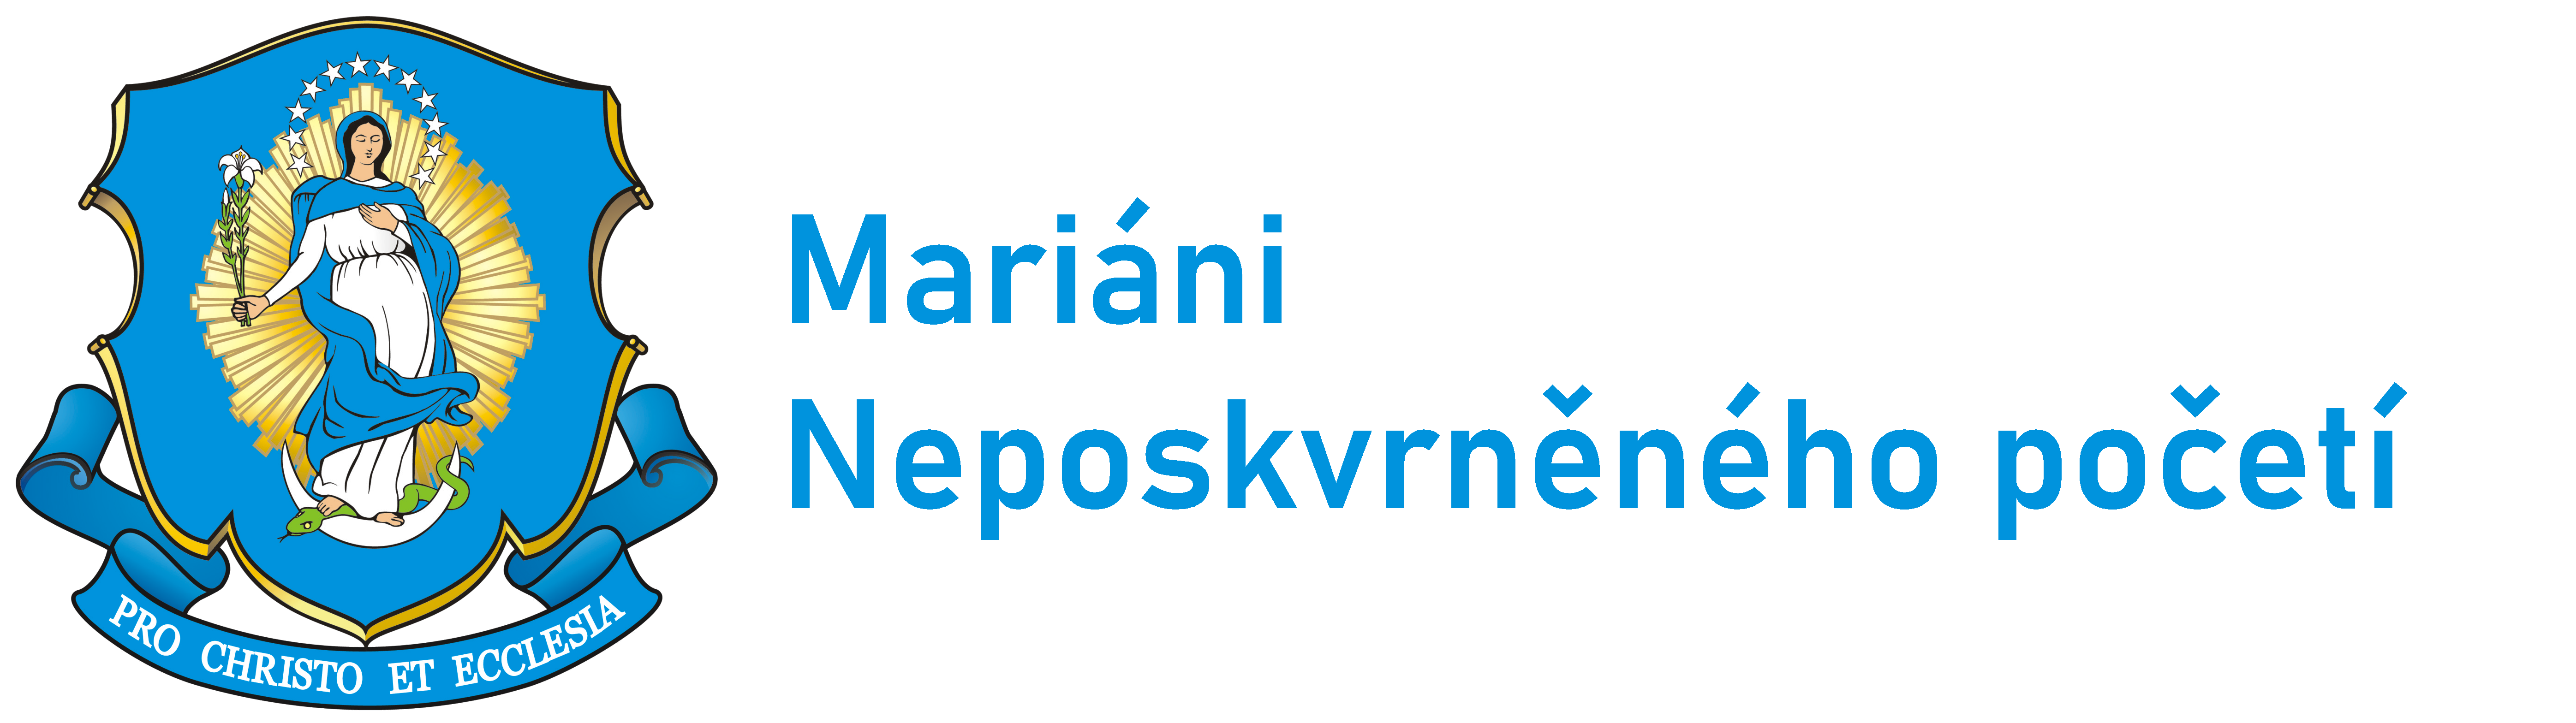 Logo Obnovitel - Mariáni ČR